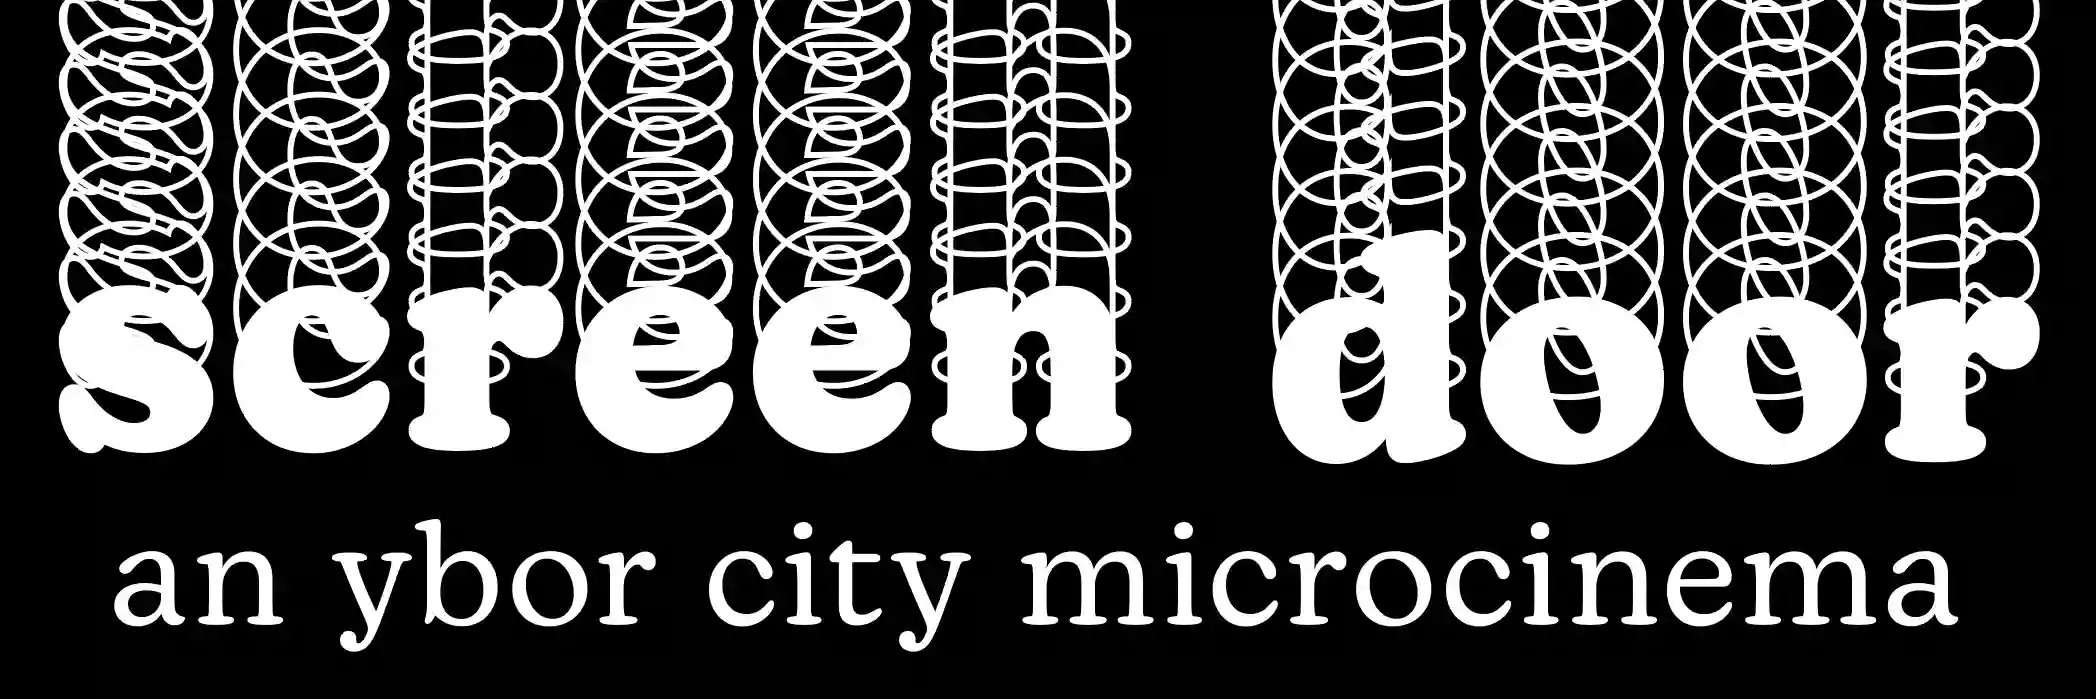 Screen Door: An Ybor City Microcinema